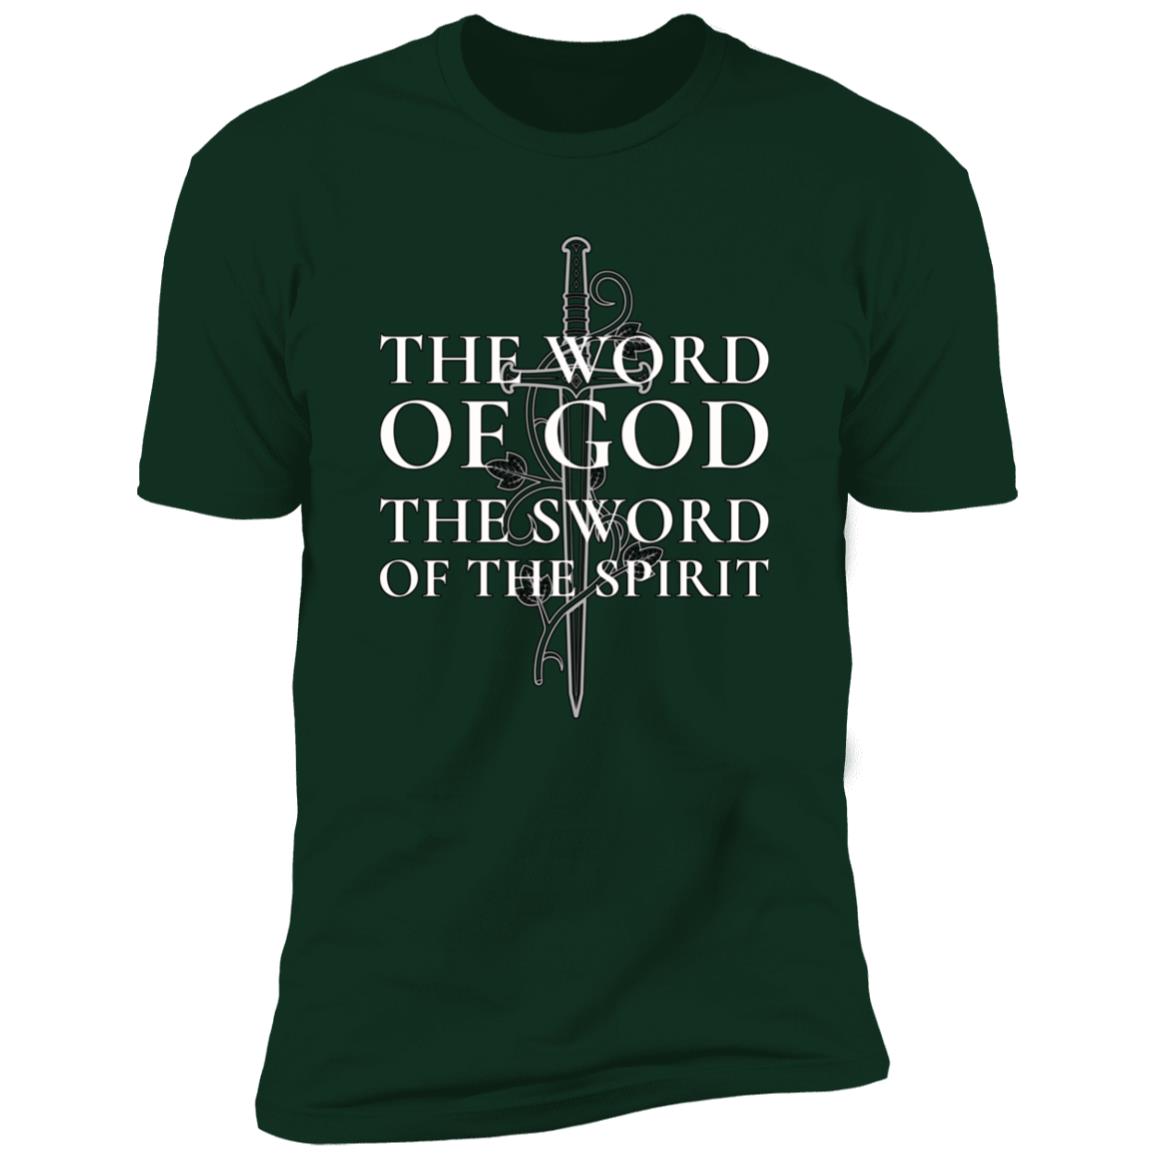 Word of God - Sword of the Spirit (Unisex Tee)